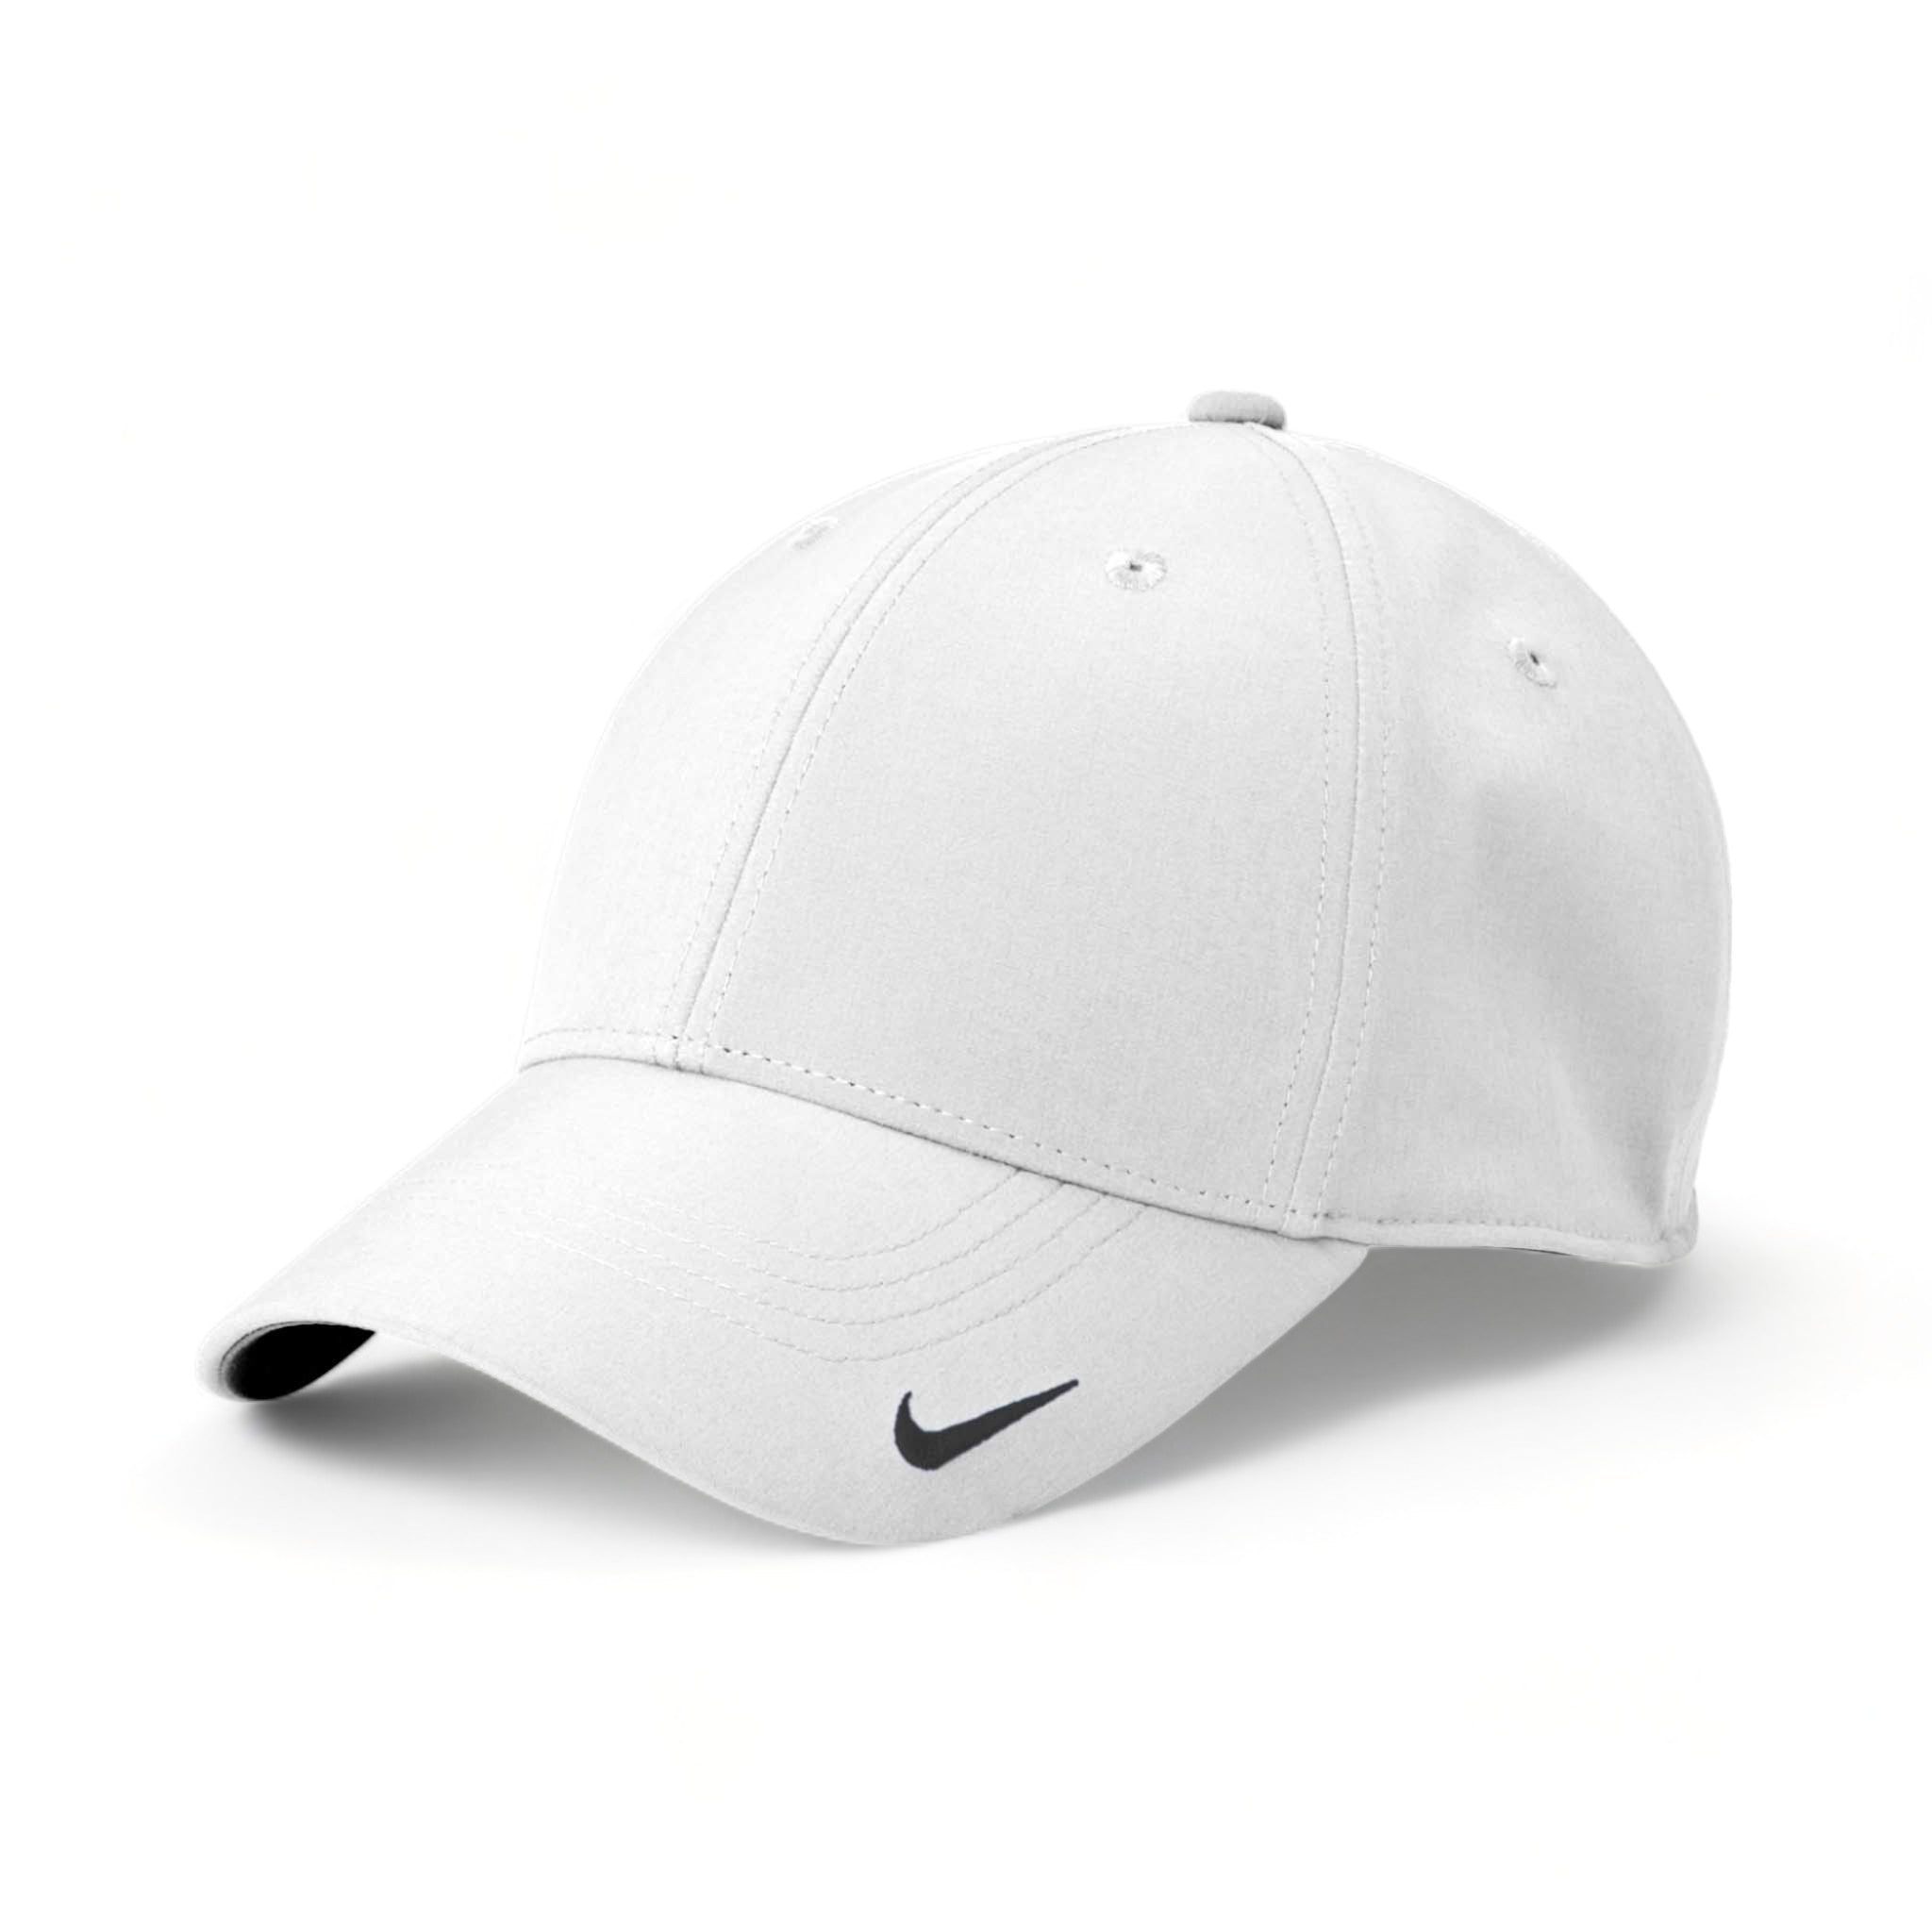 Side view of Nike NKFB6447 custom hat in white